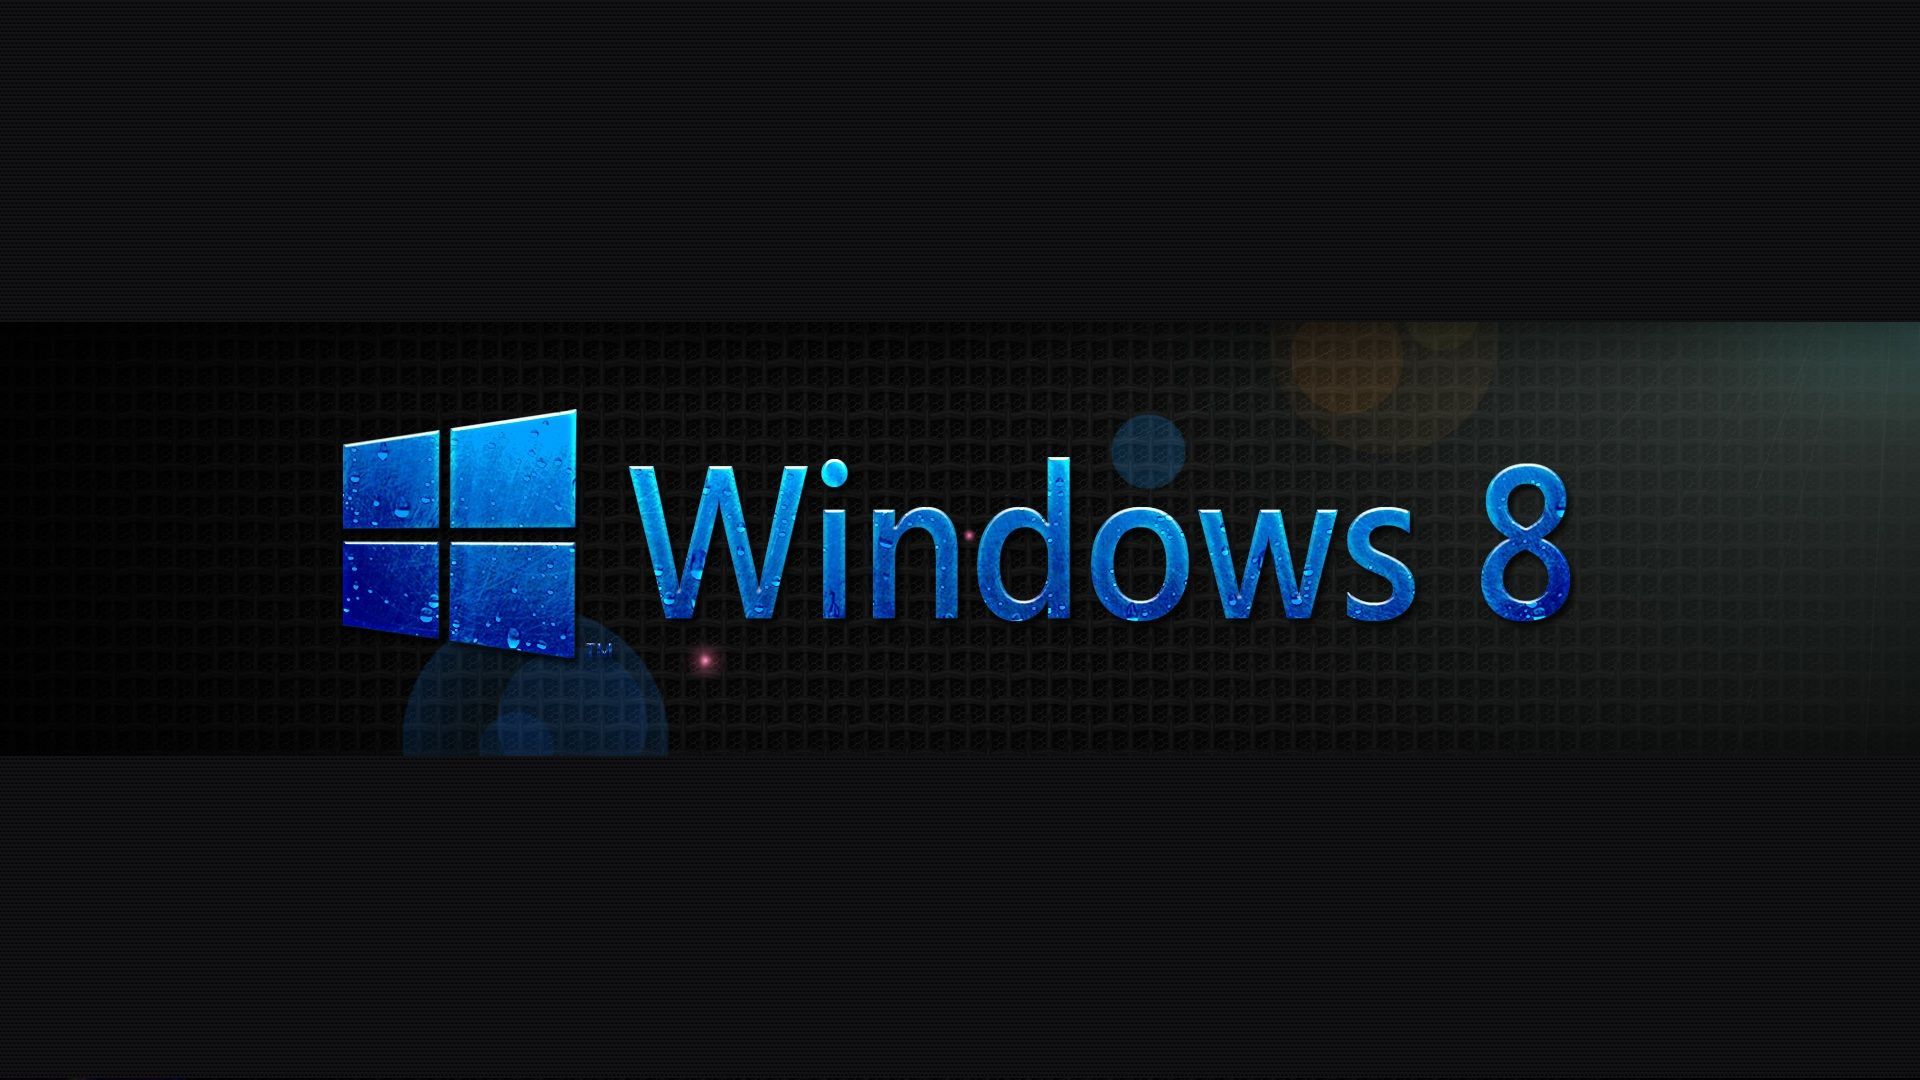 Windows 8 wallpaper hd 3d for desktop black